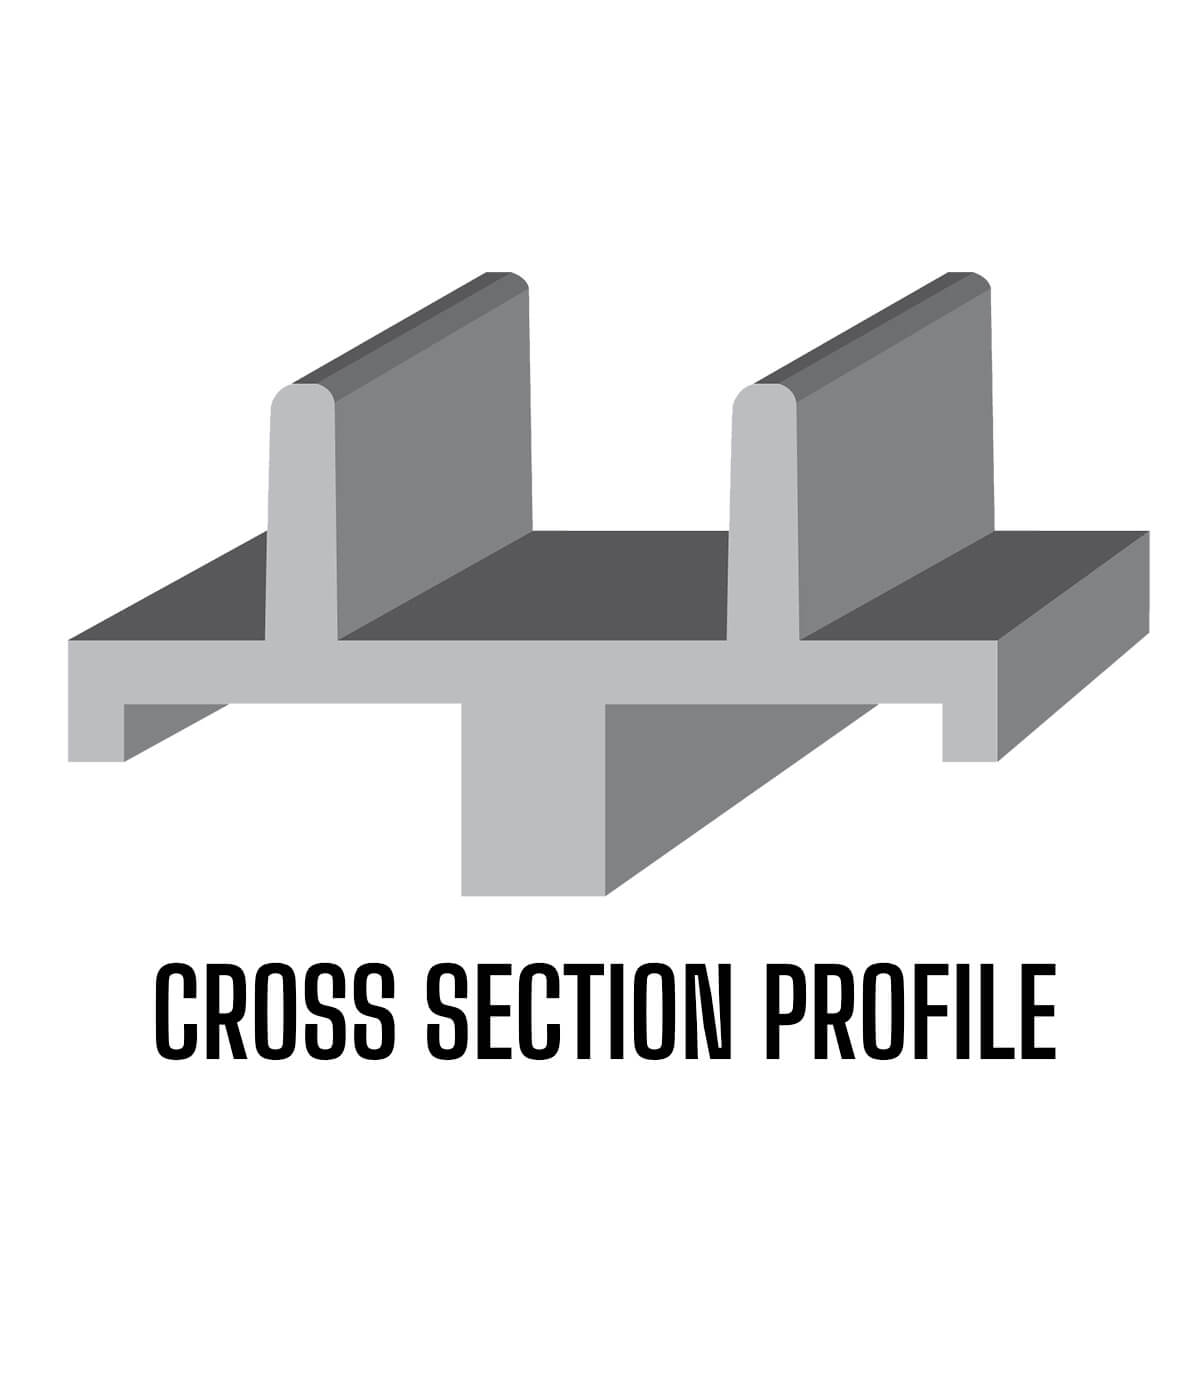 C&A Pro Skis XT Snocross ski cross section profile